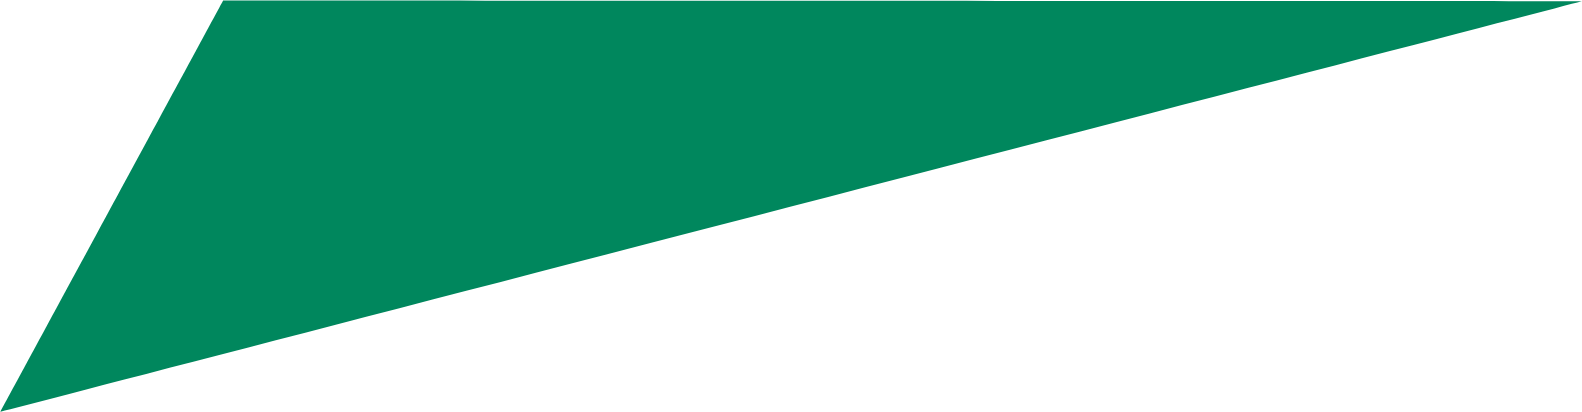 Jabil logo (PNG transparent)